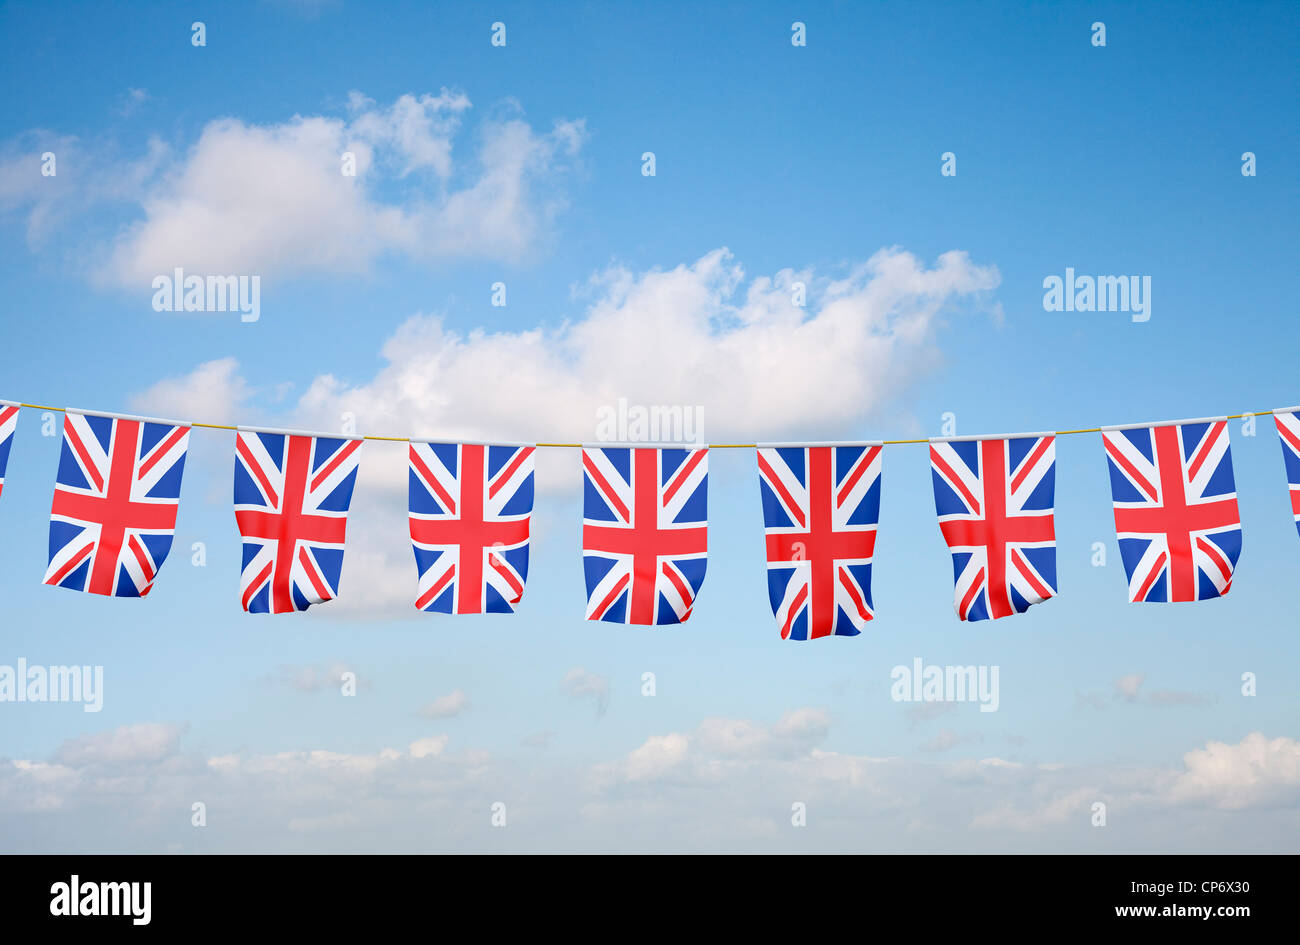 Union Jack bunting against blue sky Stock Photo